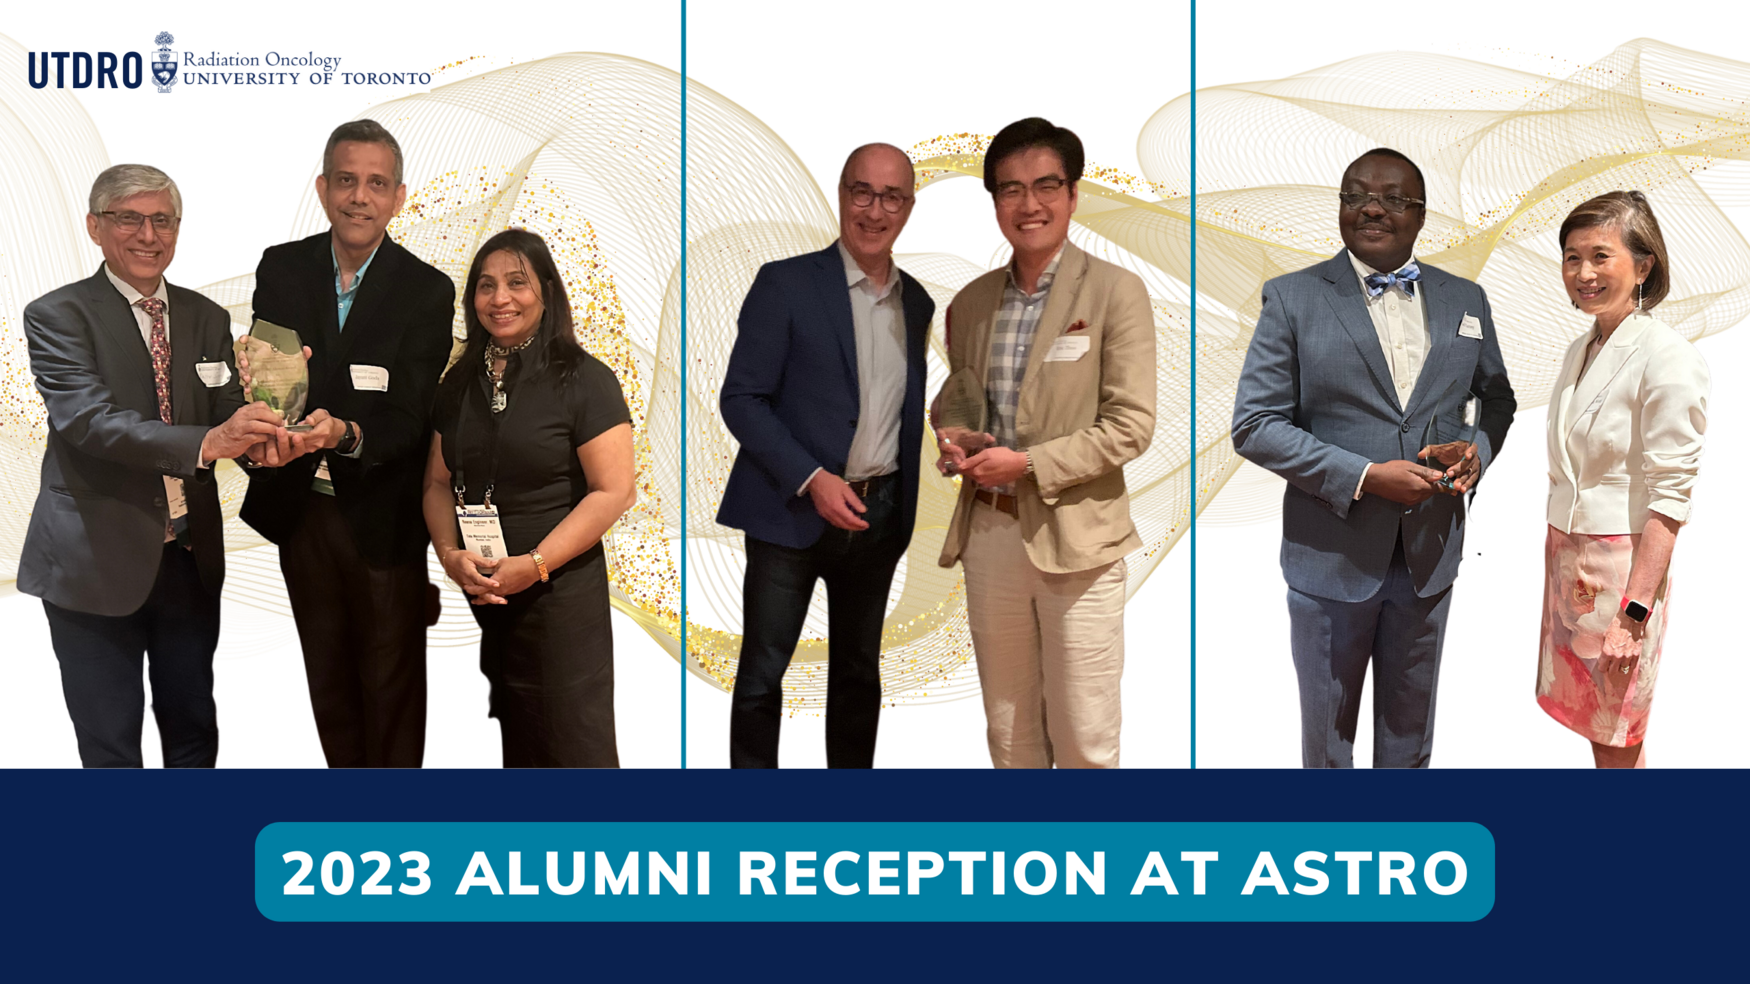 ASTRO alumni reception